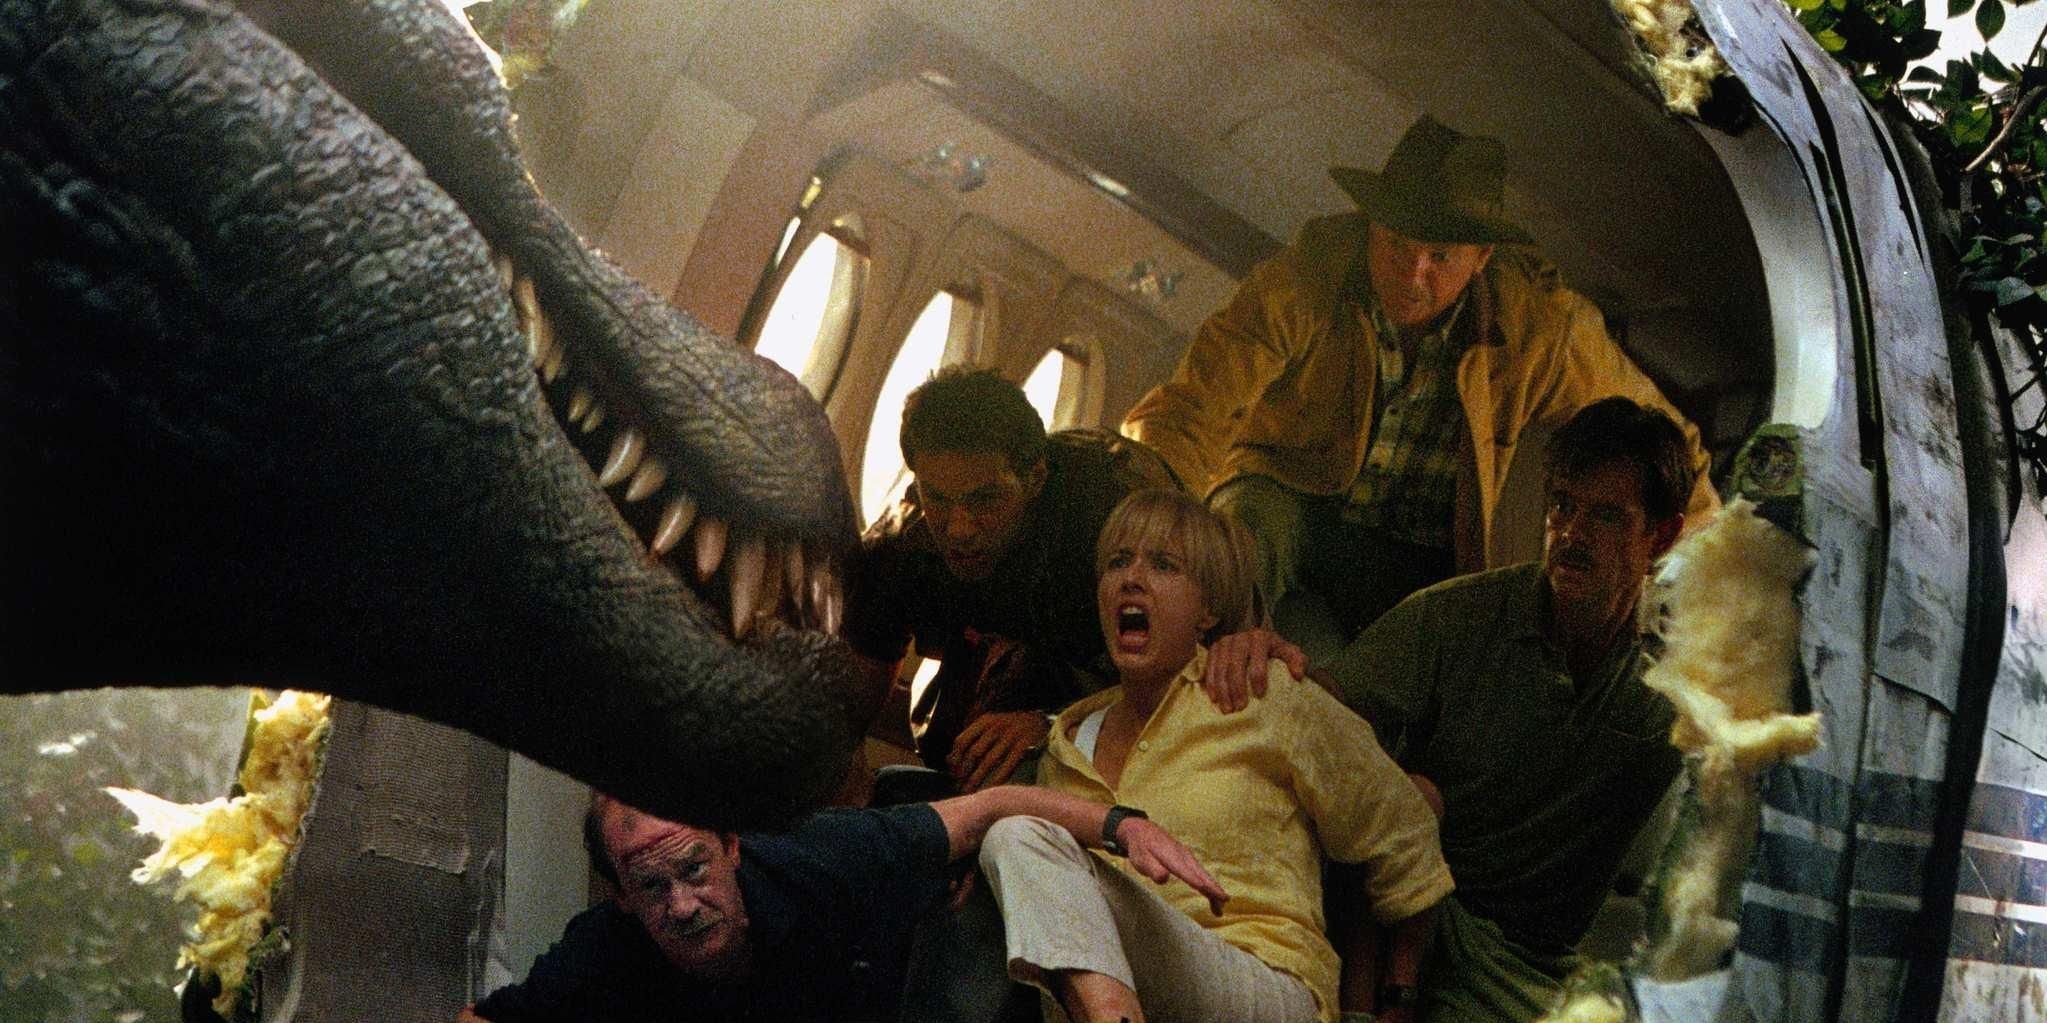 Jurassic Park scene where the visitors hide from a dino